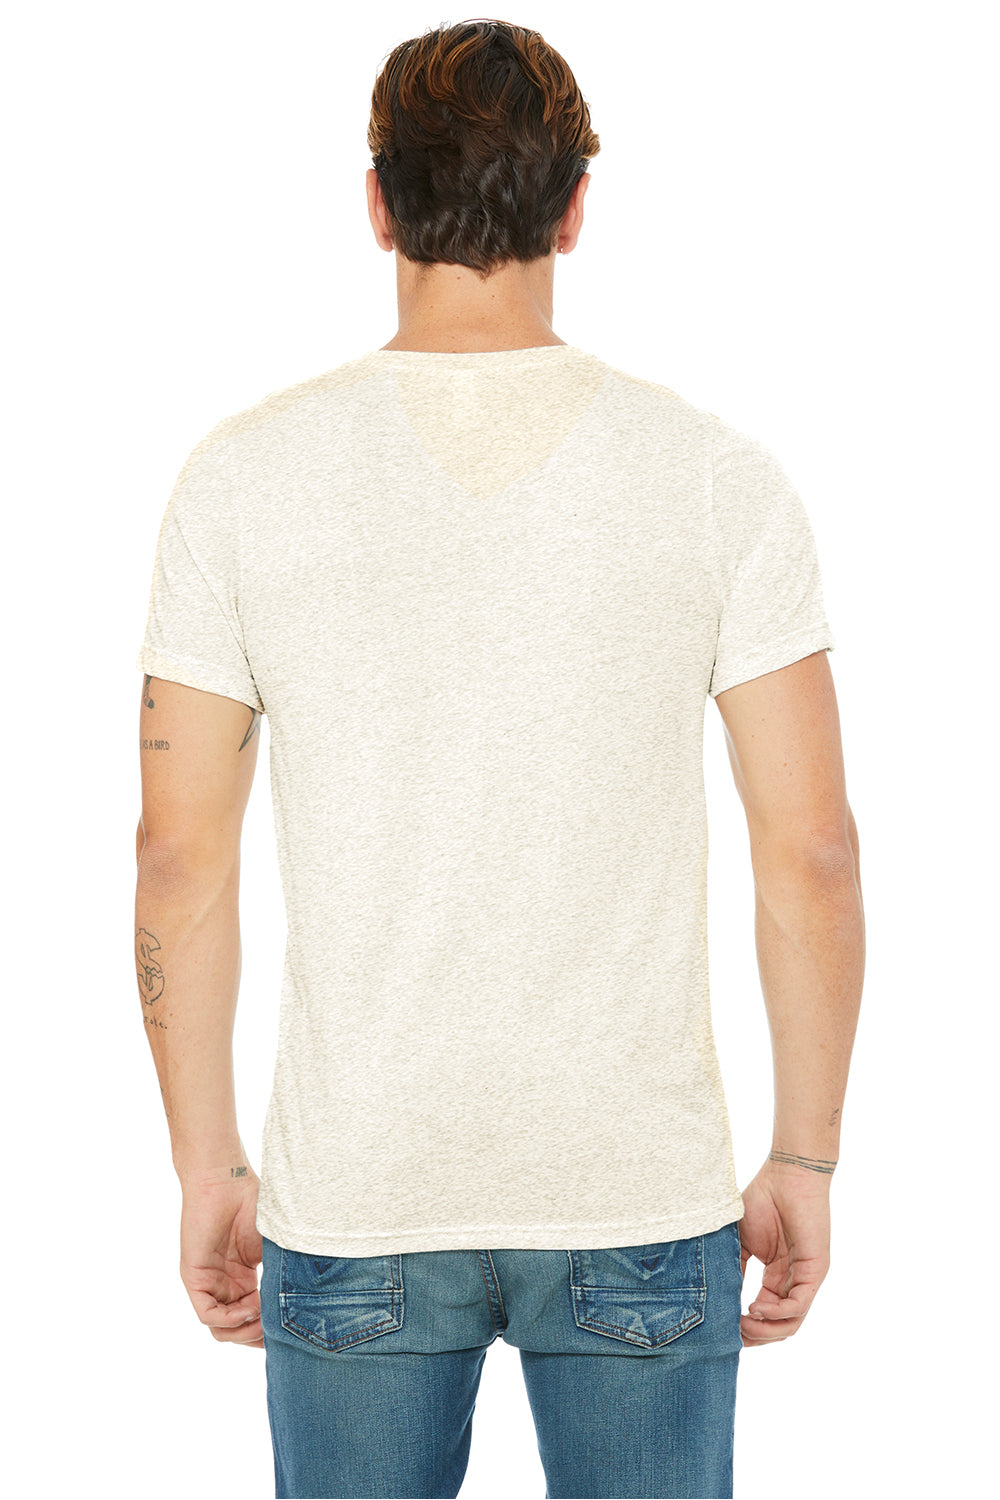 Bella + Canvas BC3415/3415C/3415 Mens Short Sleeve V-Neck T-Shirt Oatmeal Model Back